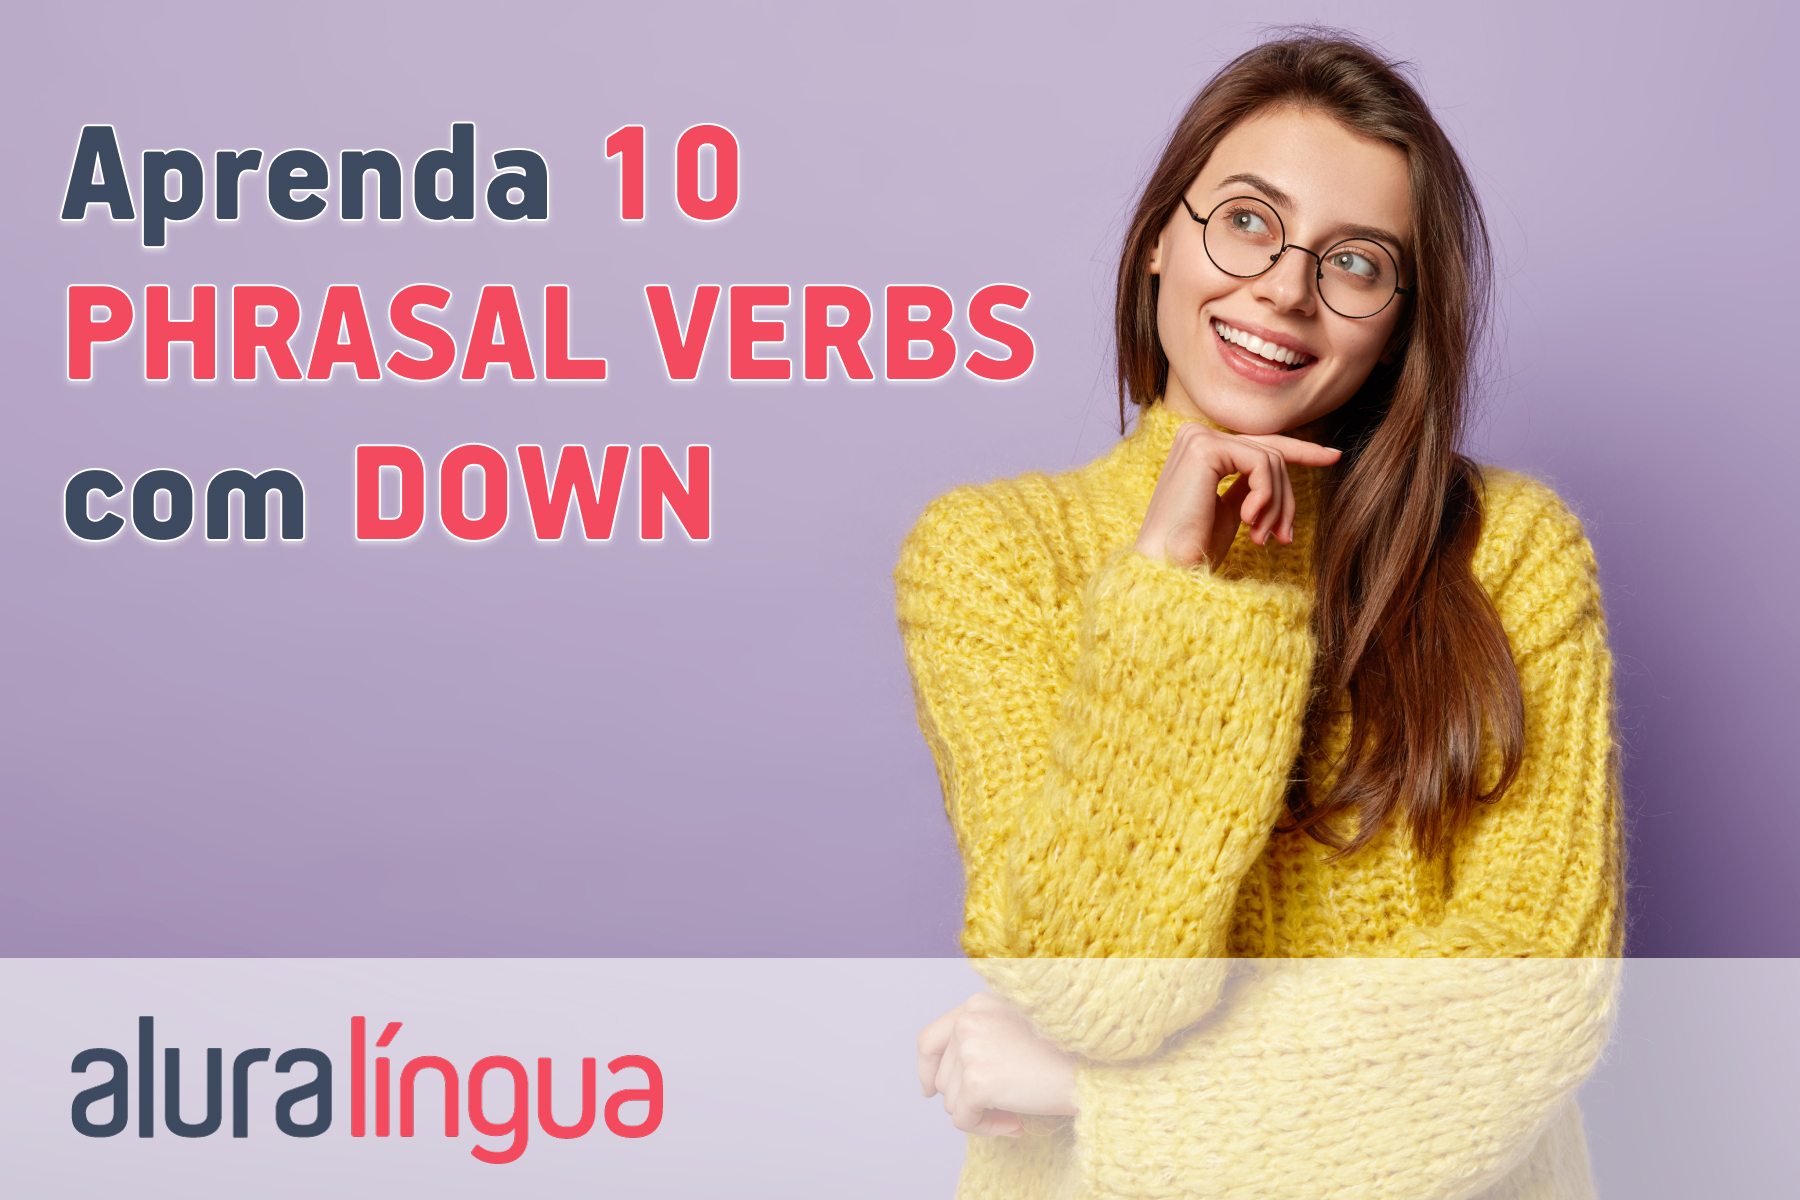 Aprenda 10 phrasal verbs com DOWN #inset